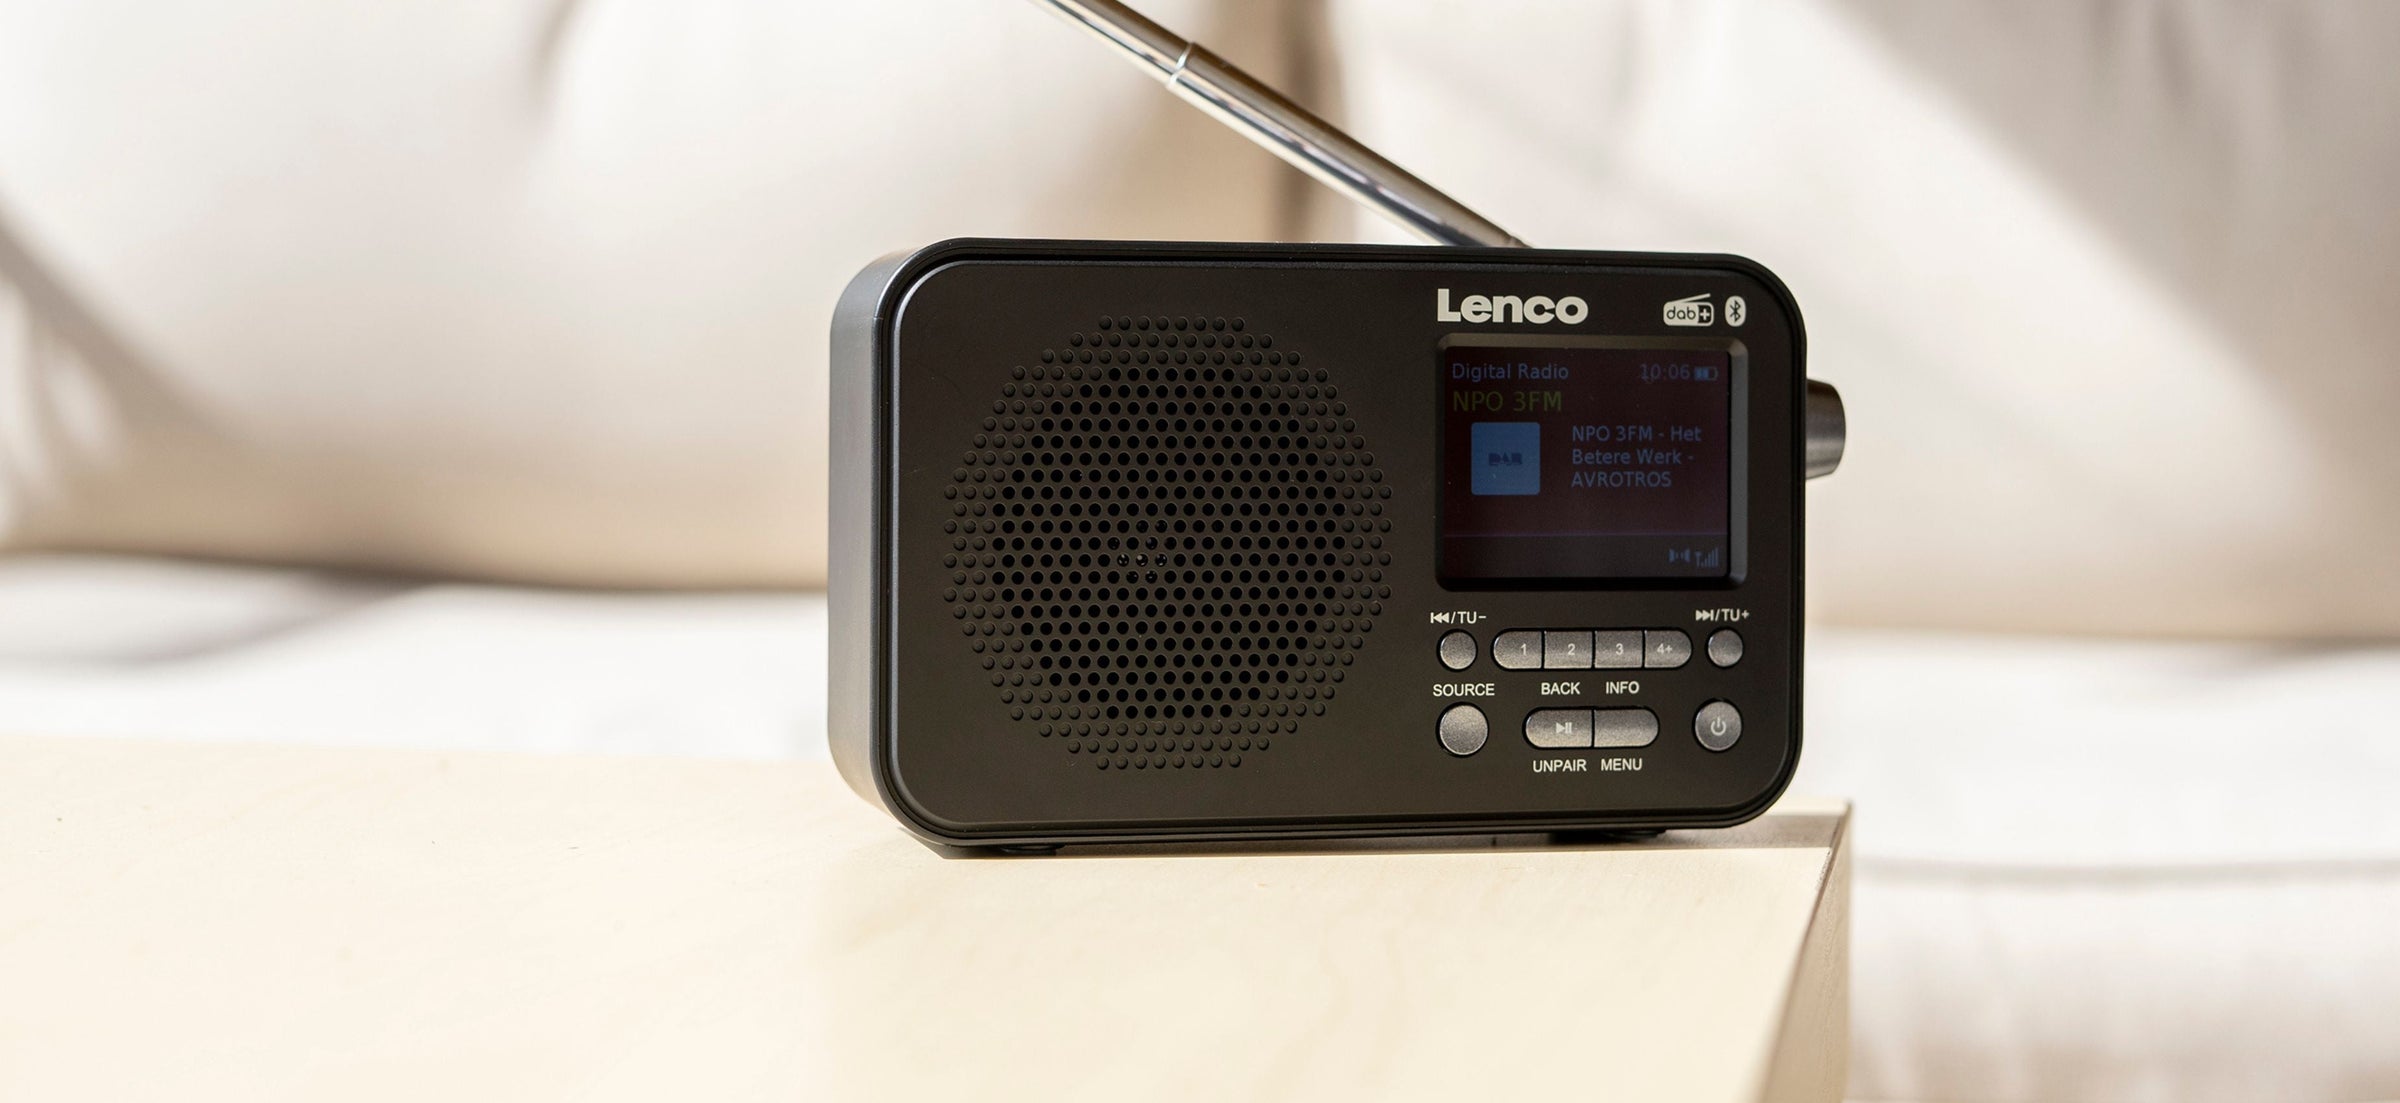 Lenco Bluetooth radios | Lenco Shop Now in Official the